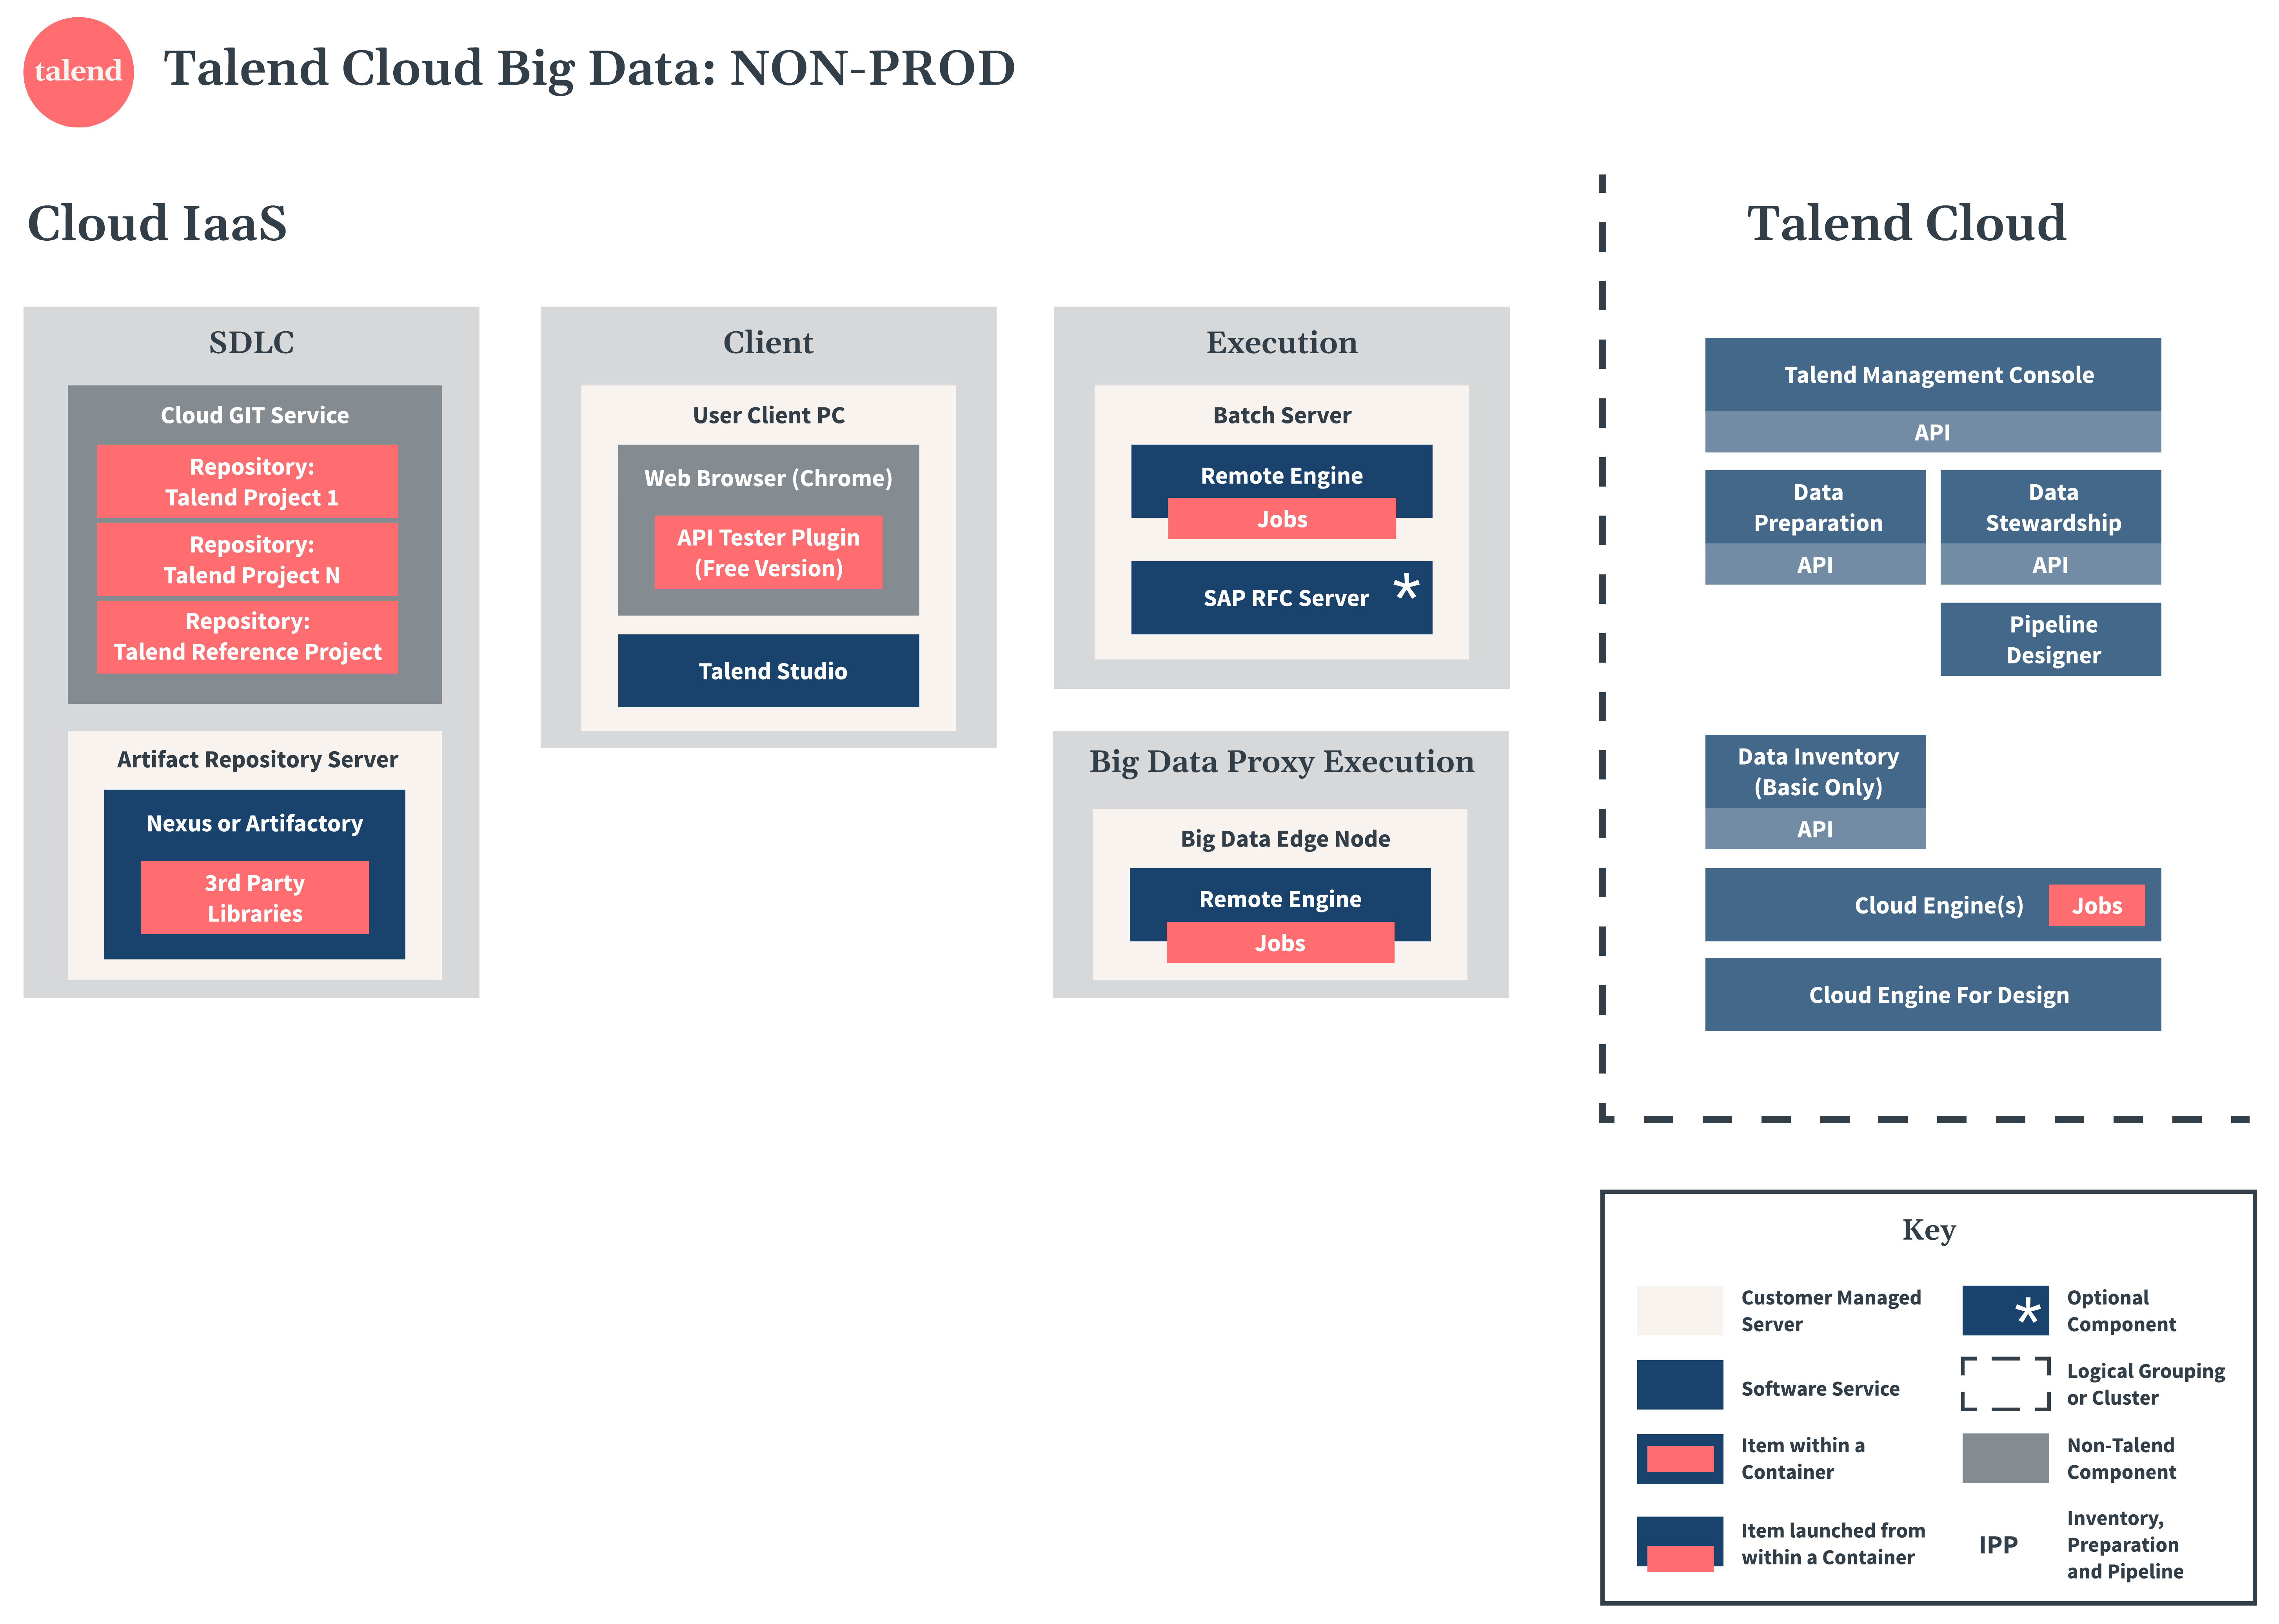 Talend Cloud Big Data non-production diagram.